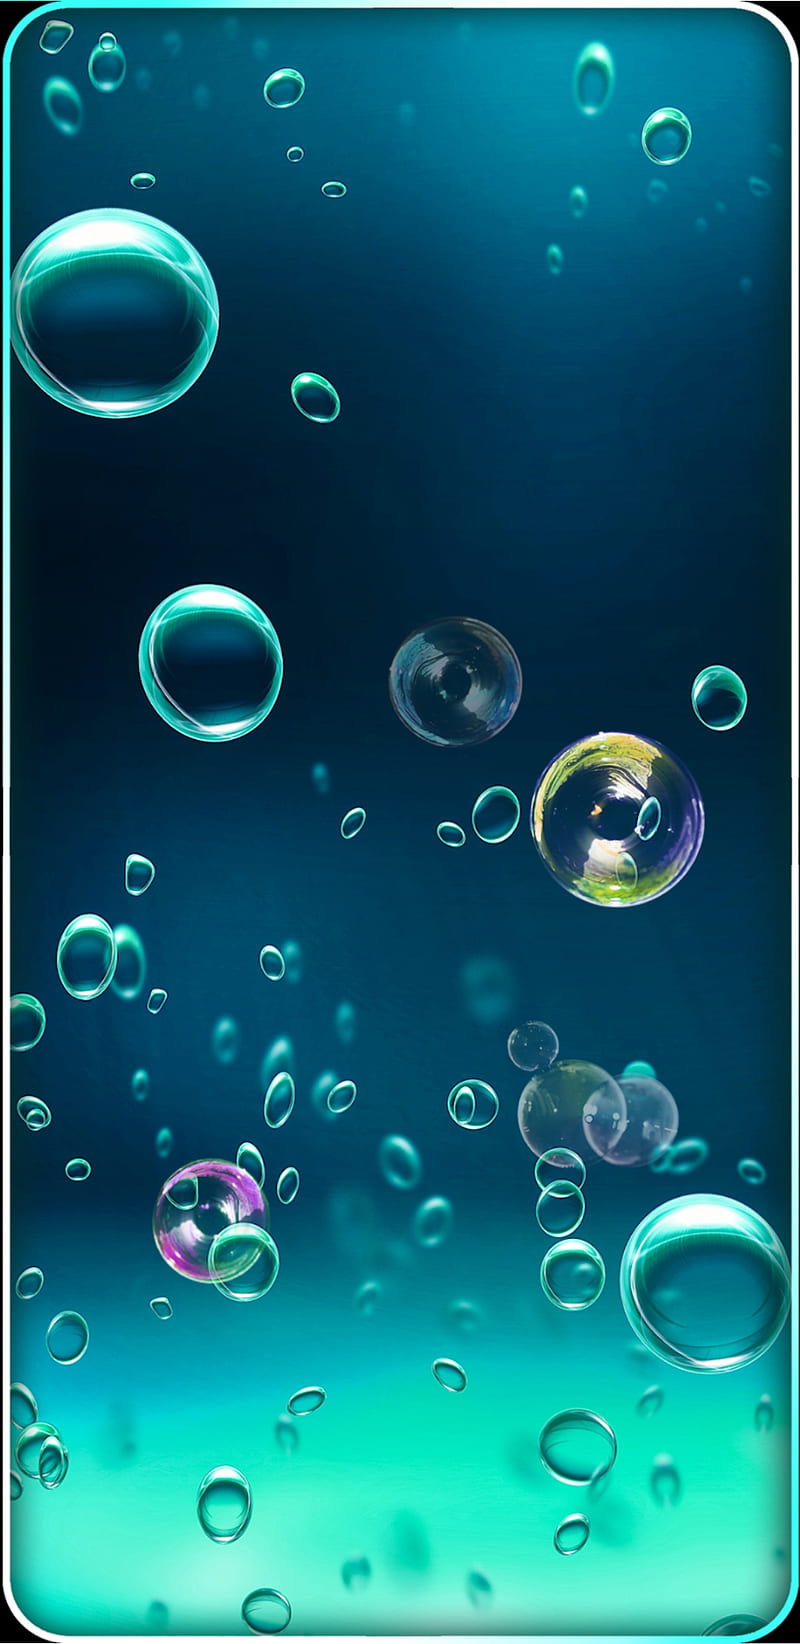 Bubble Dance 3D Wallpaper - TenStickers